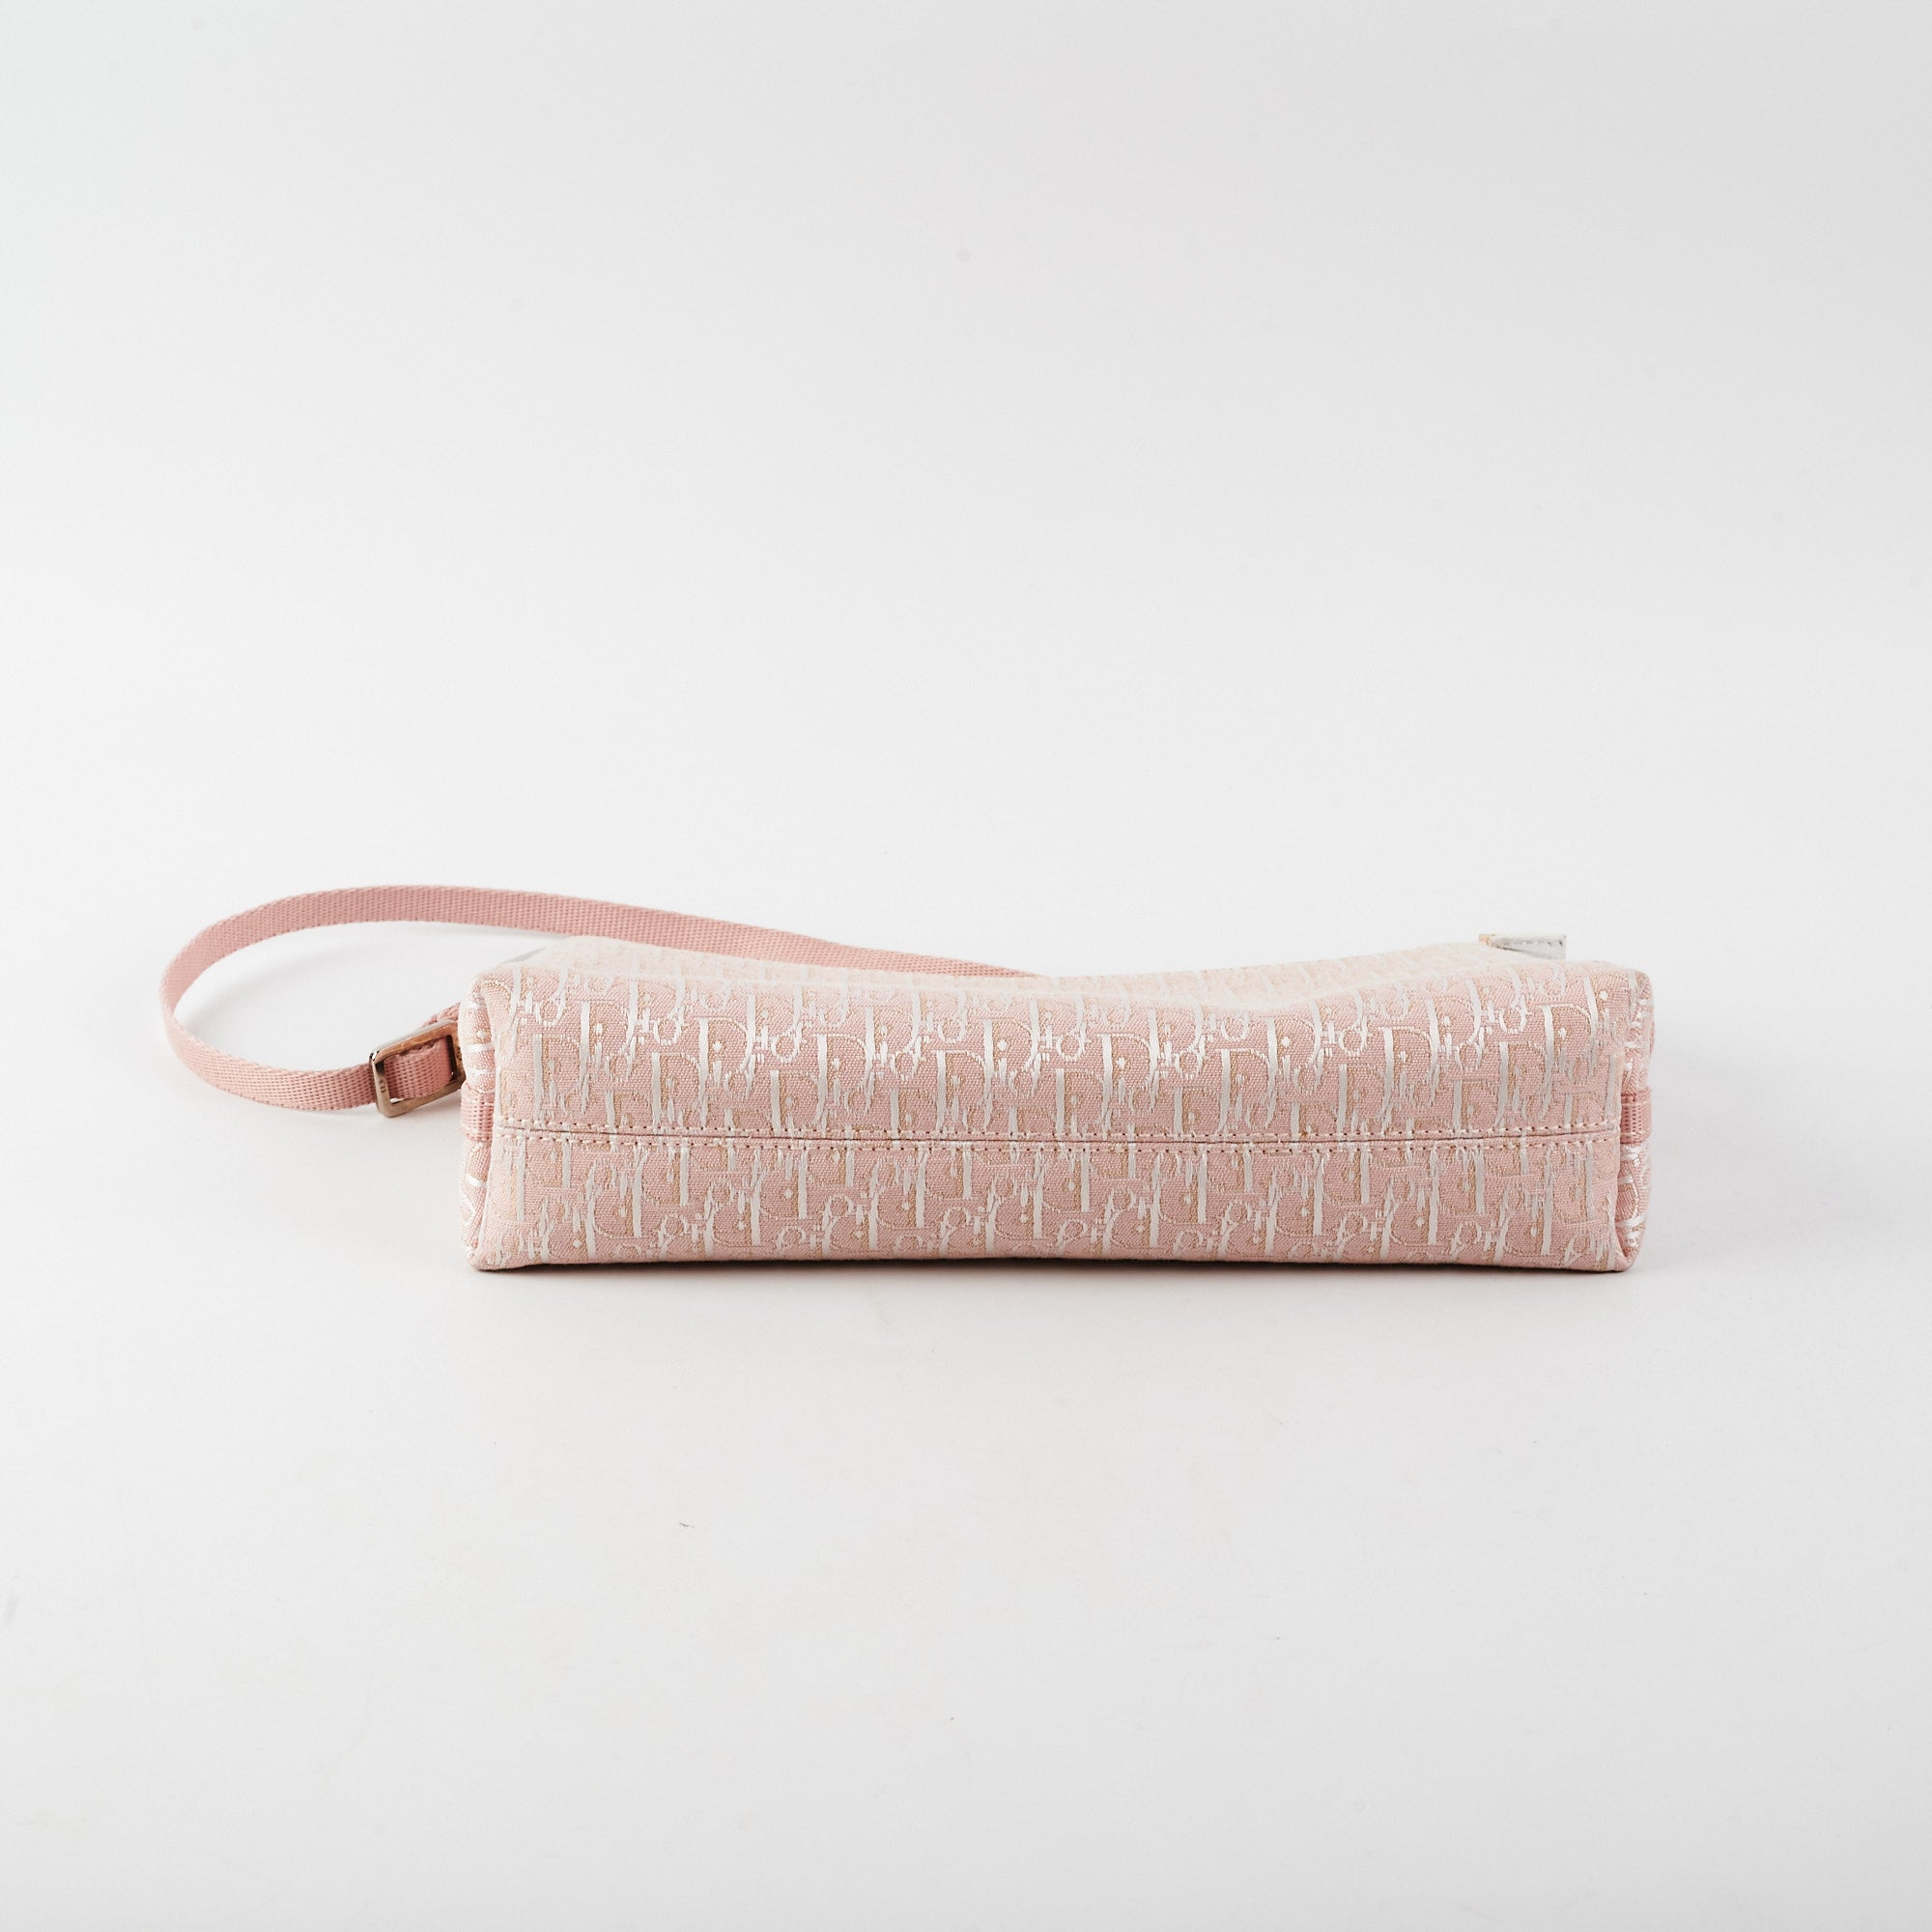 Dior Vintage Diorissimo Trotter Pochette Bag Pink - THE PURSE AFFAIR